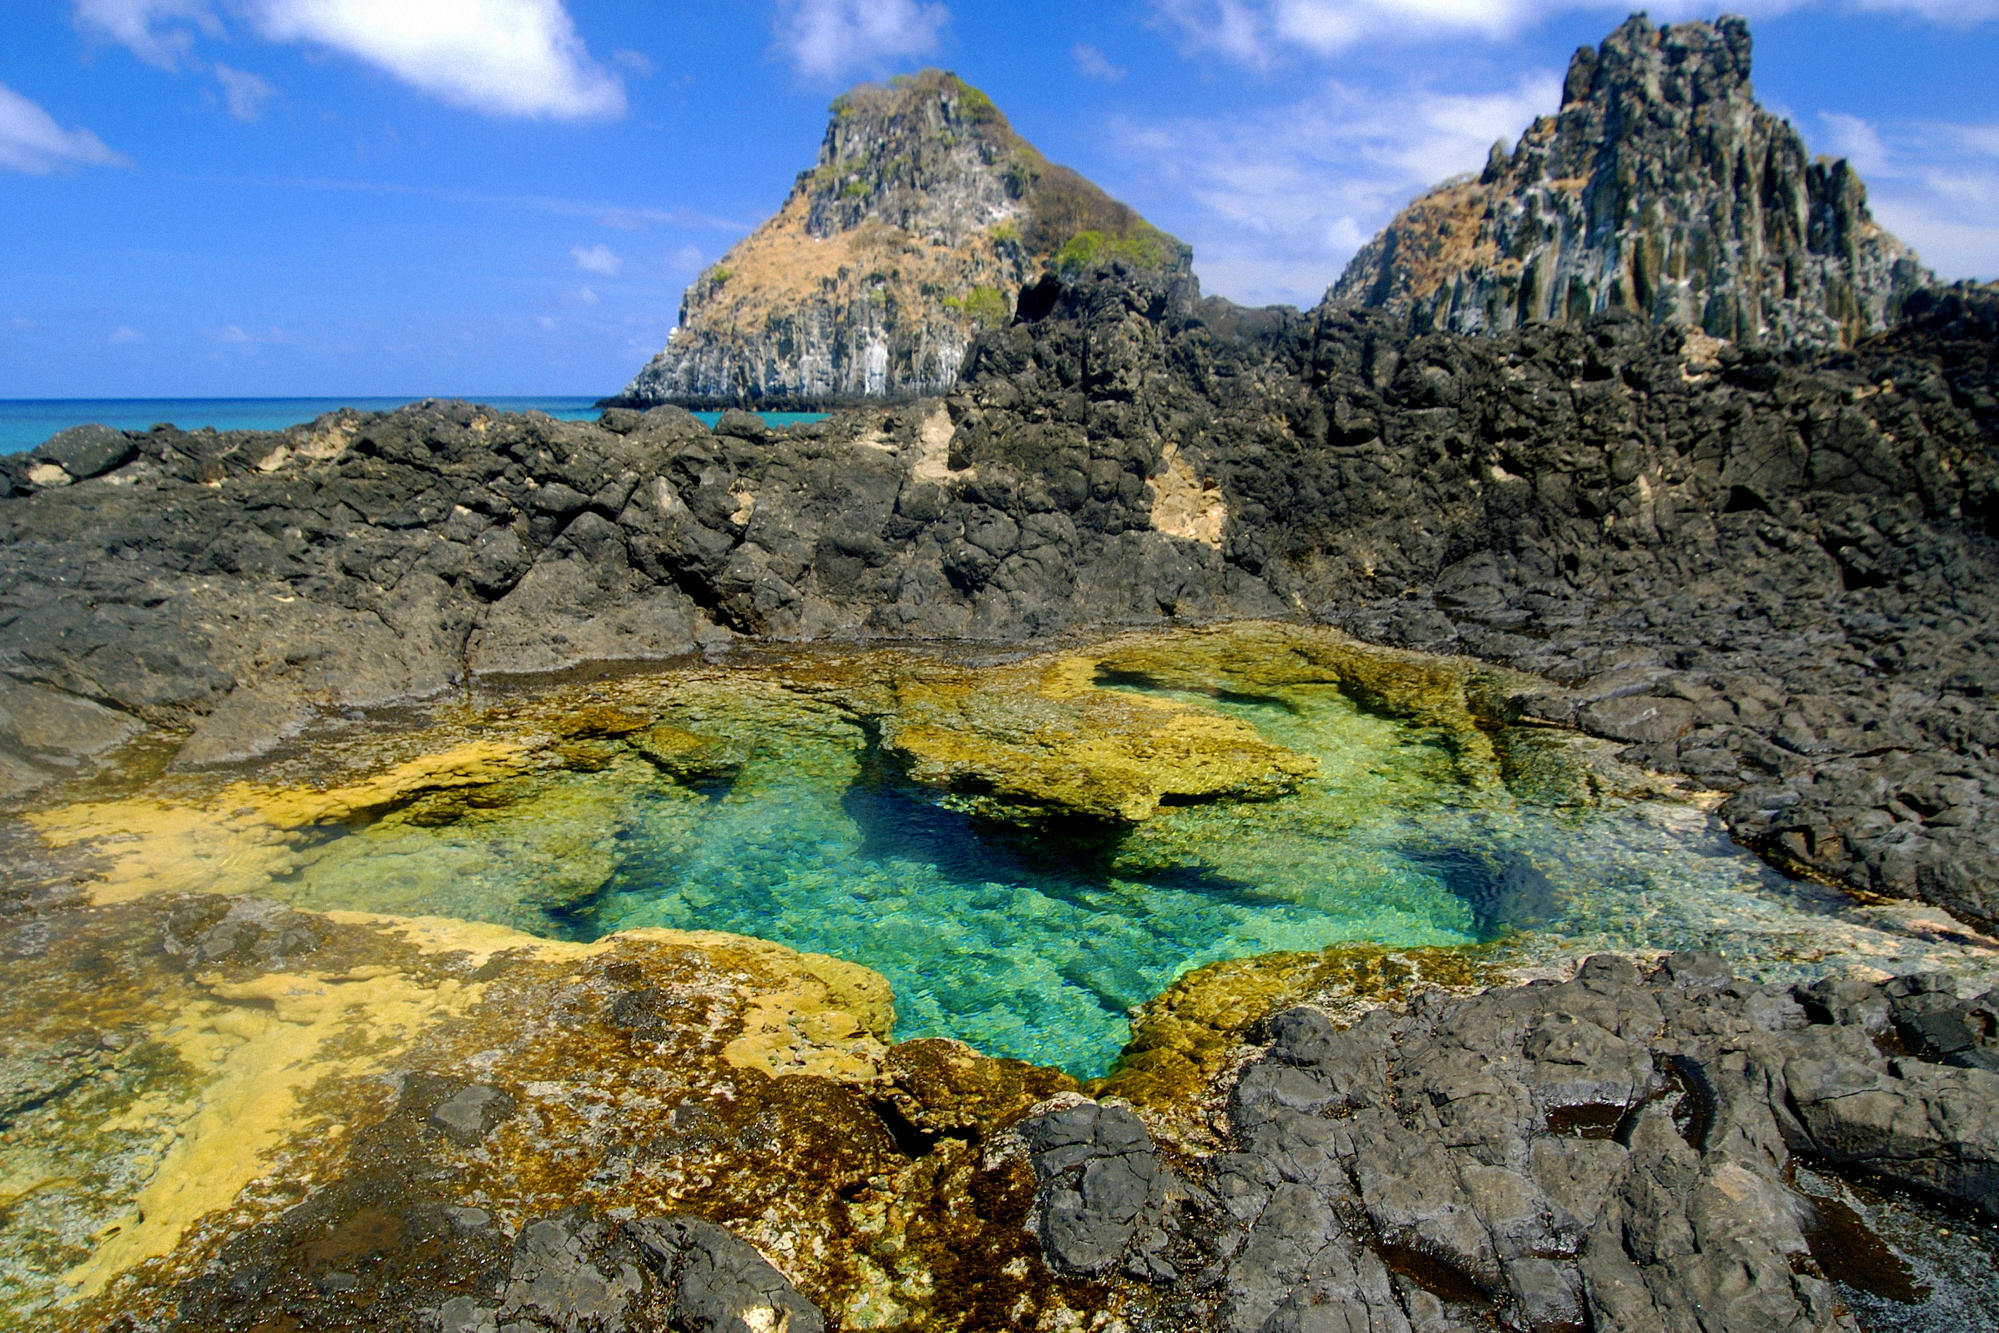 Fernando de Noronha, Brazil: A breathtaking island with serene nature.